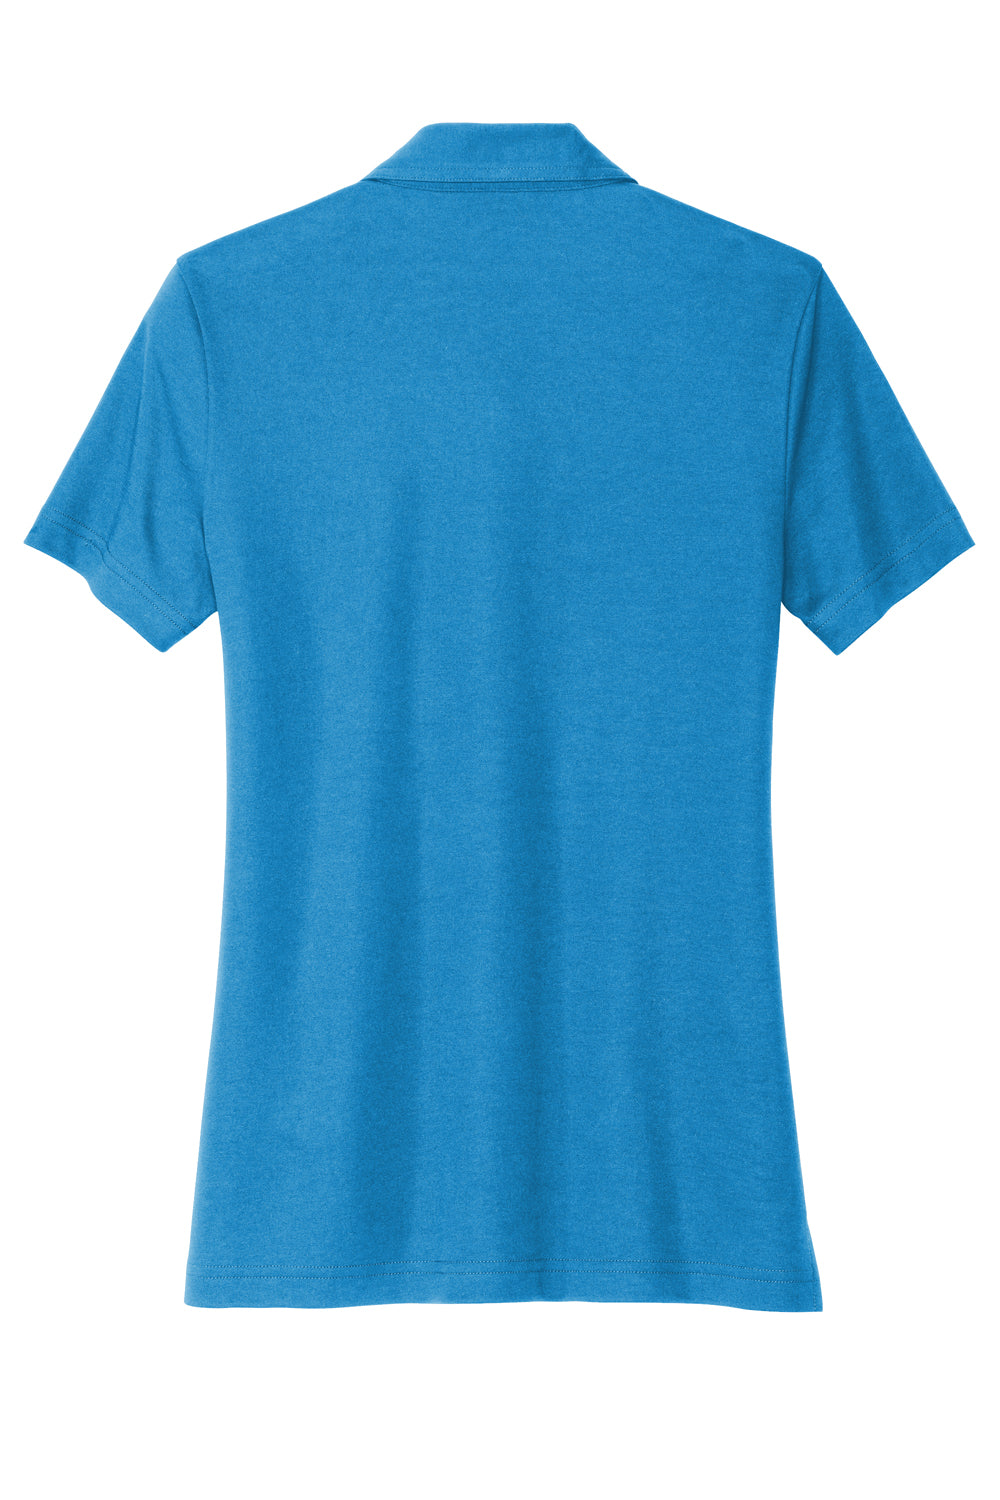 TravisMathew TM1WW001  Oceanside Wrinkle Resistant Short Sleeve Polo Shirt Classic Blue Flat Back